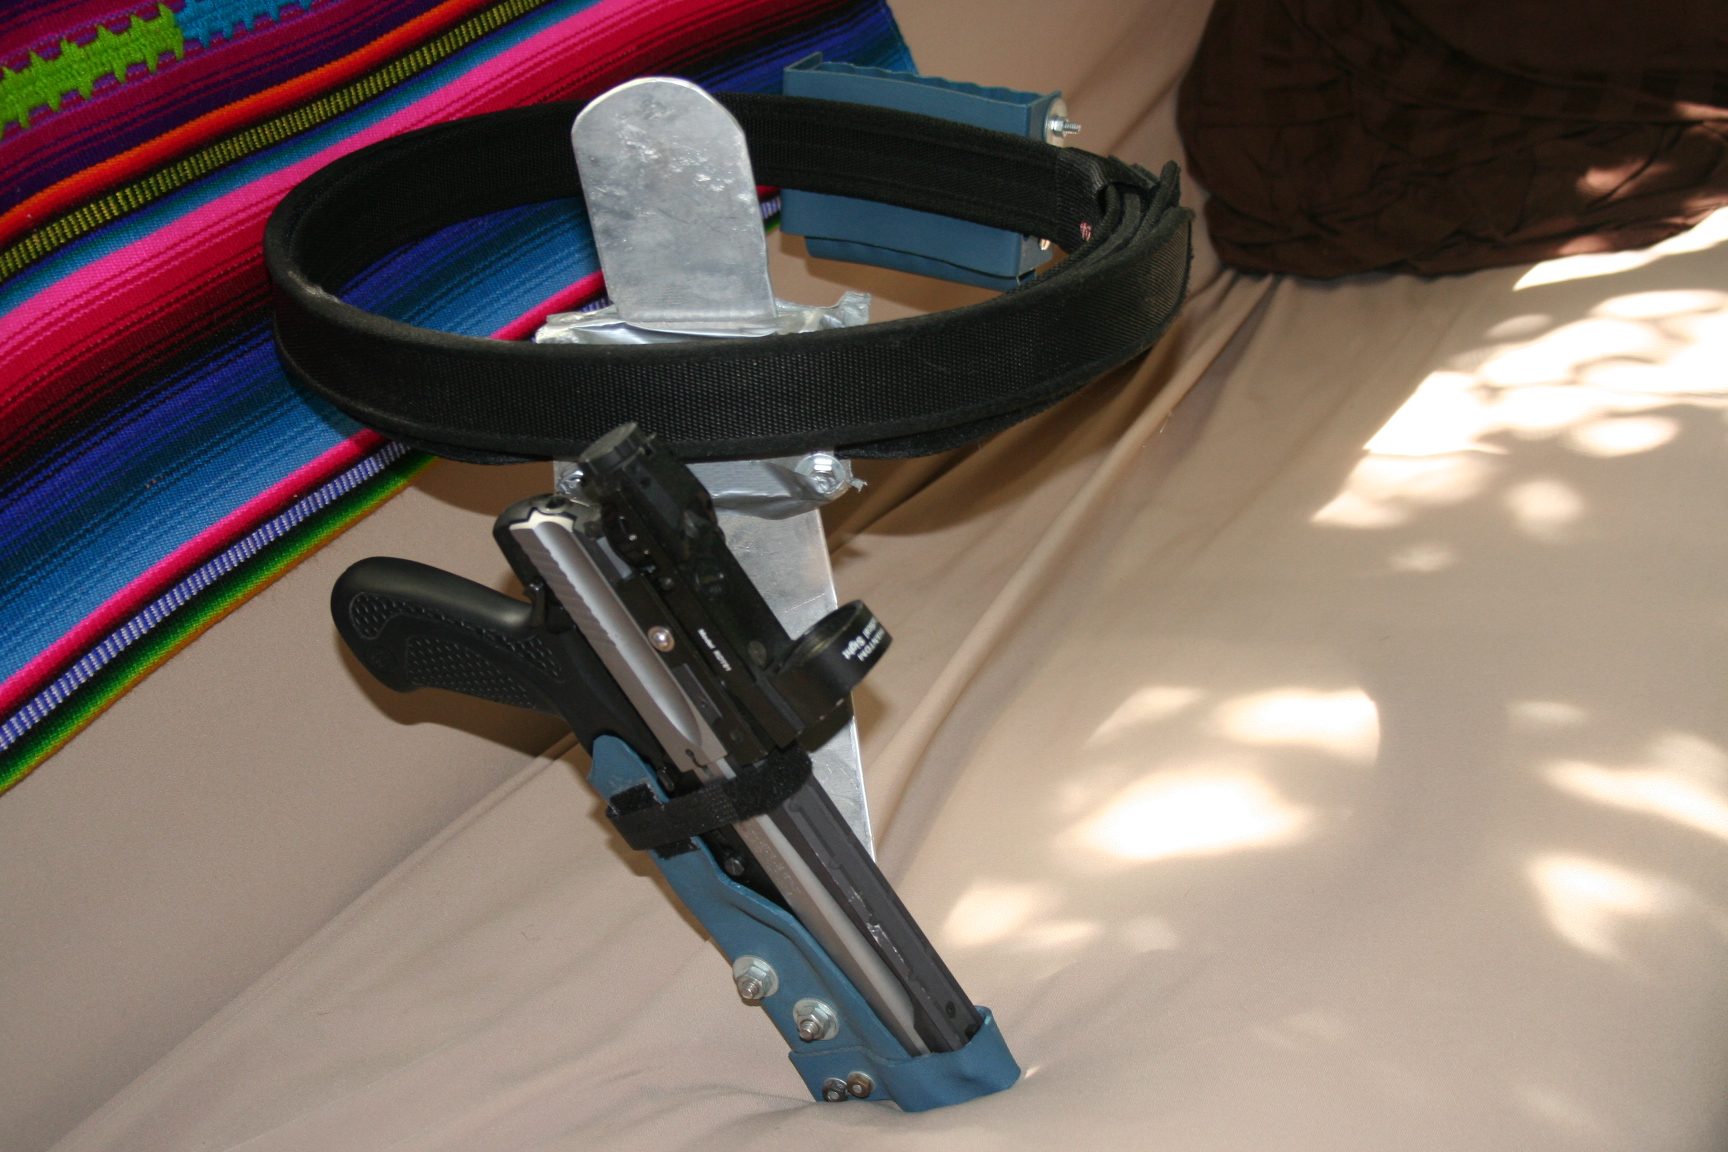 DIY kydex holster - TexasCHLforum.com